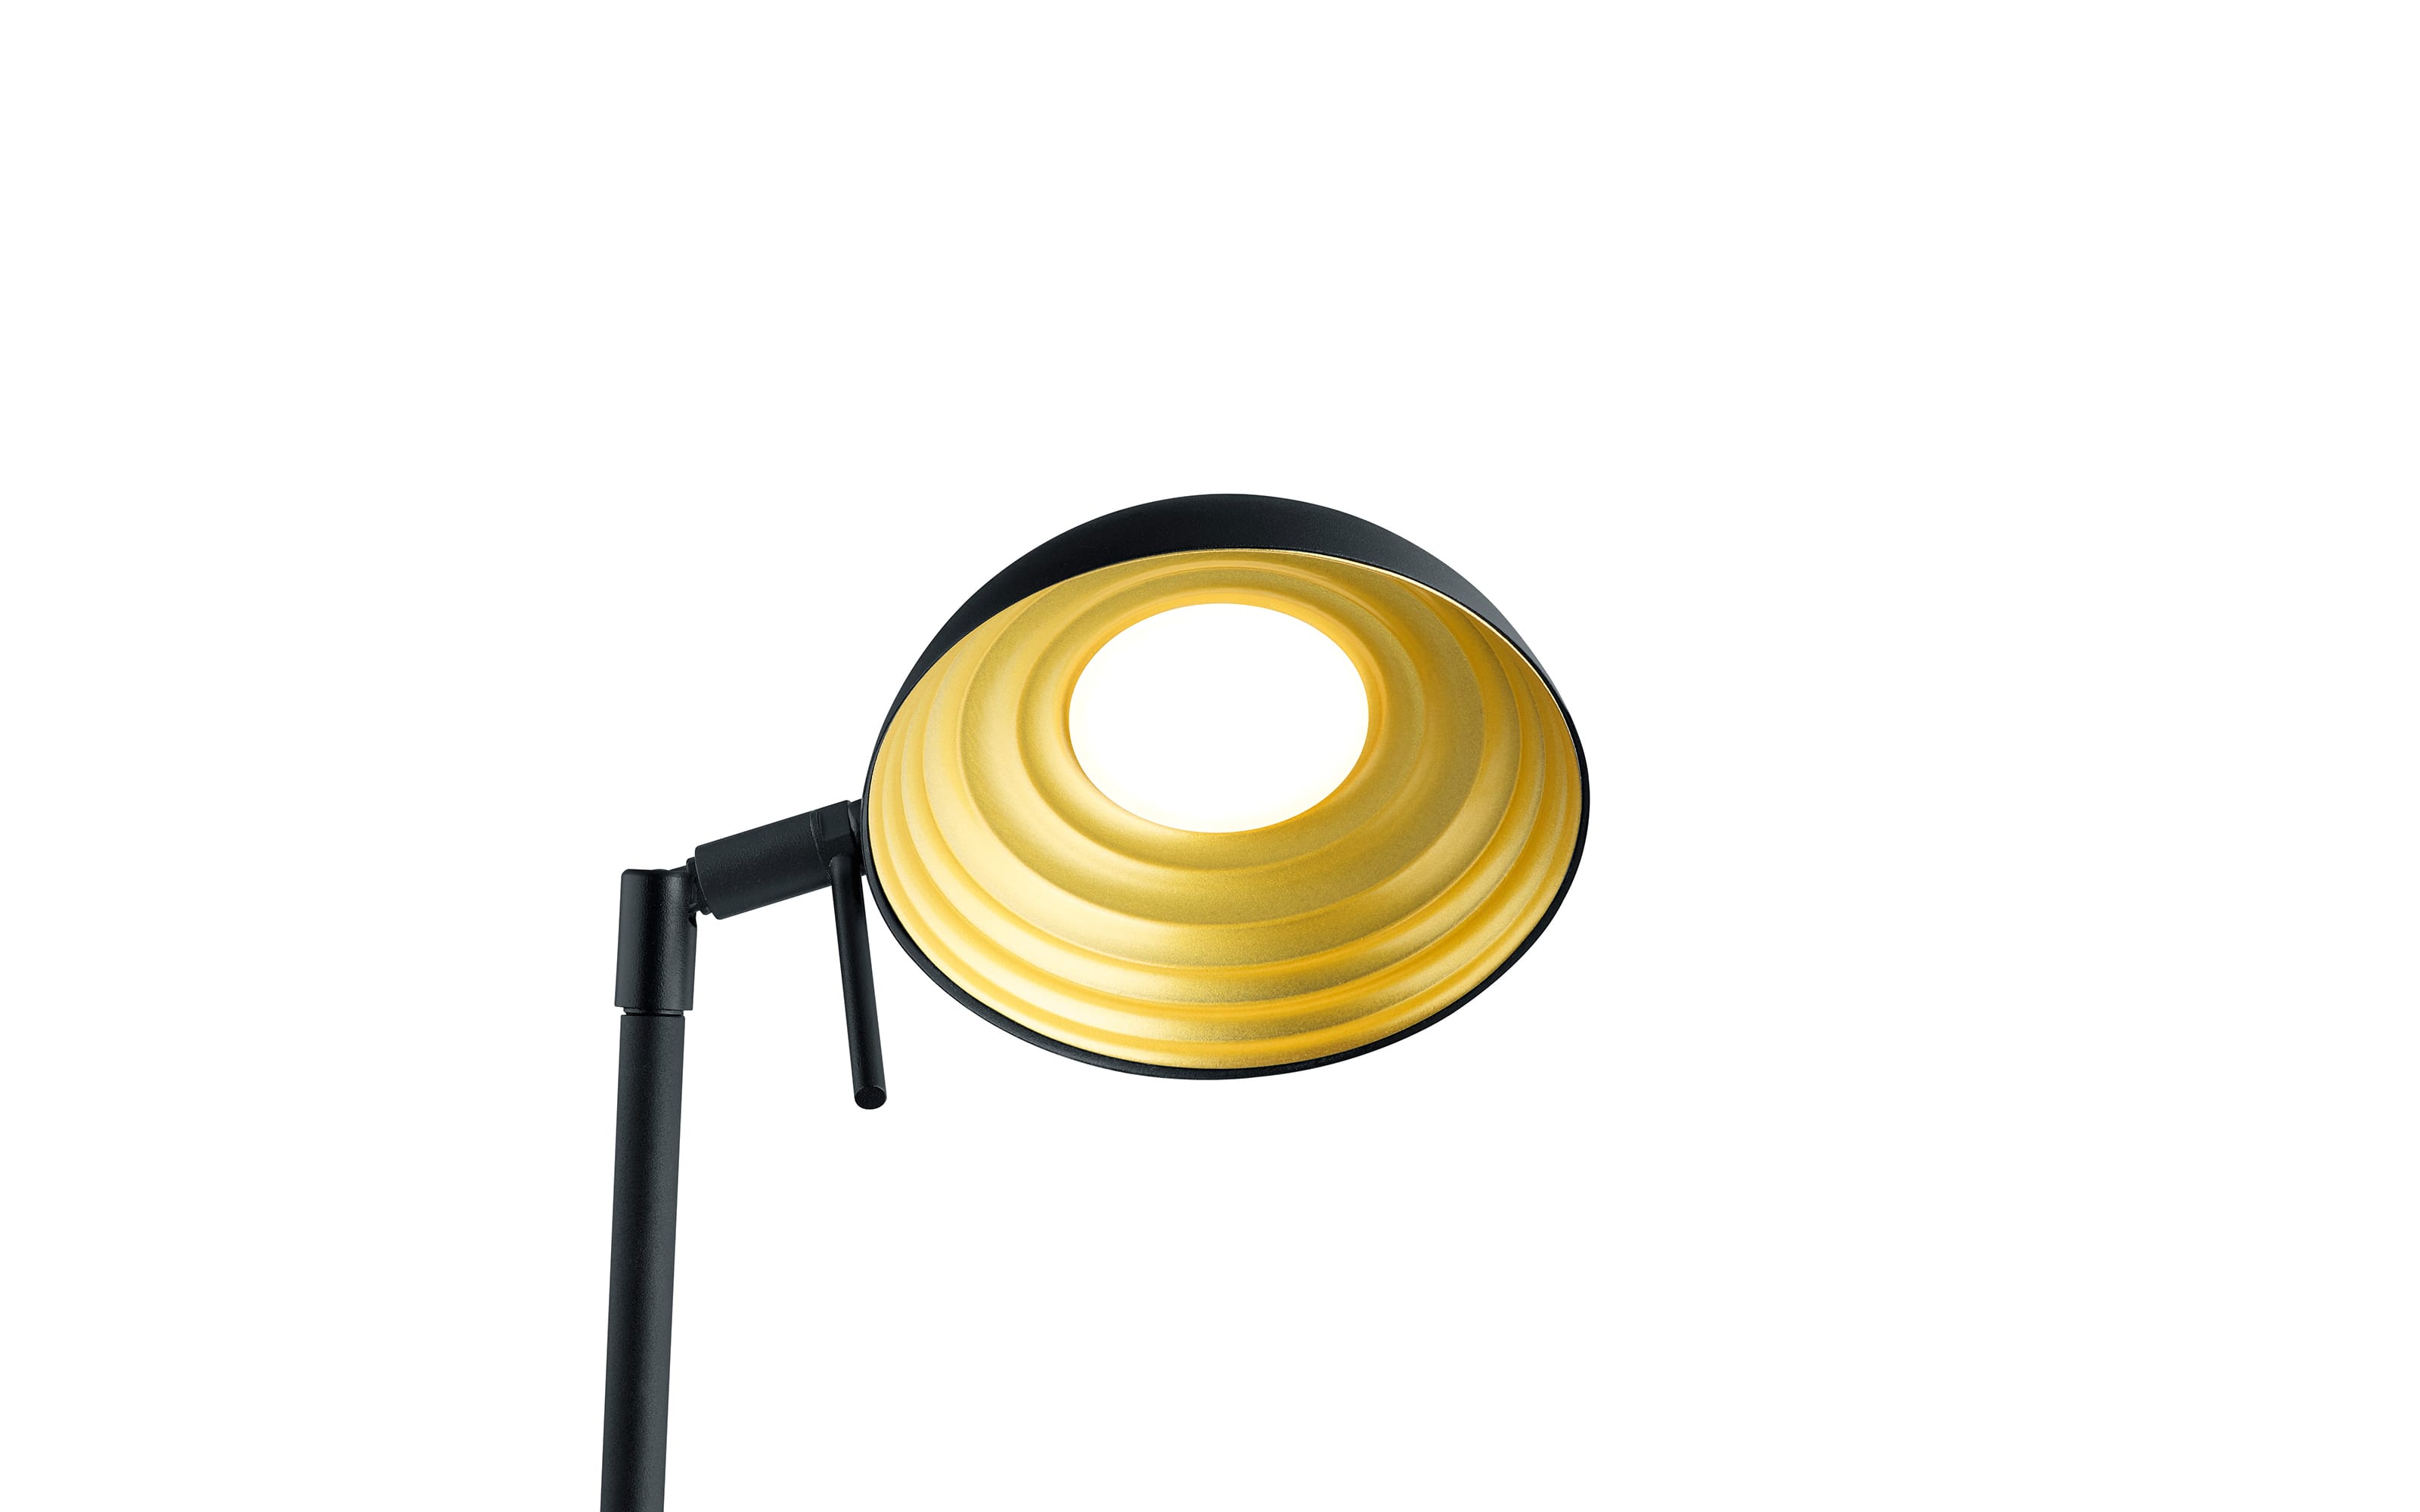 LED-Standleuchte Samy, schwarz, 130 cm